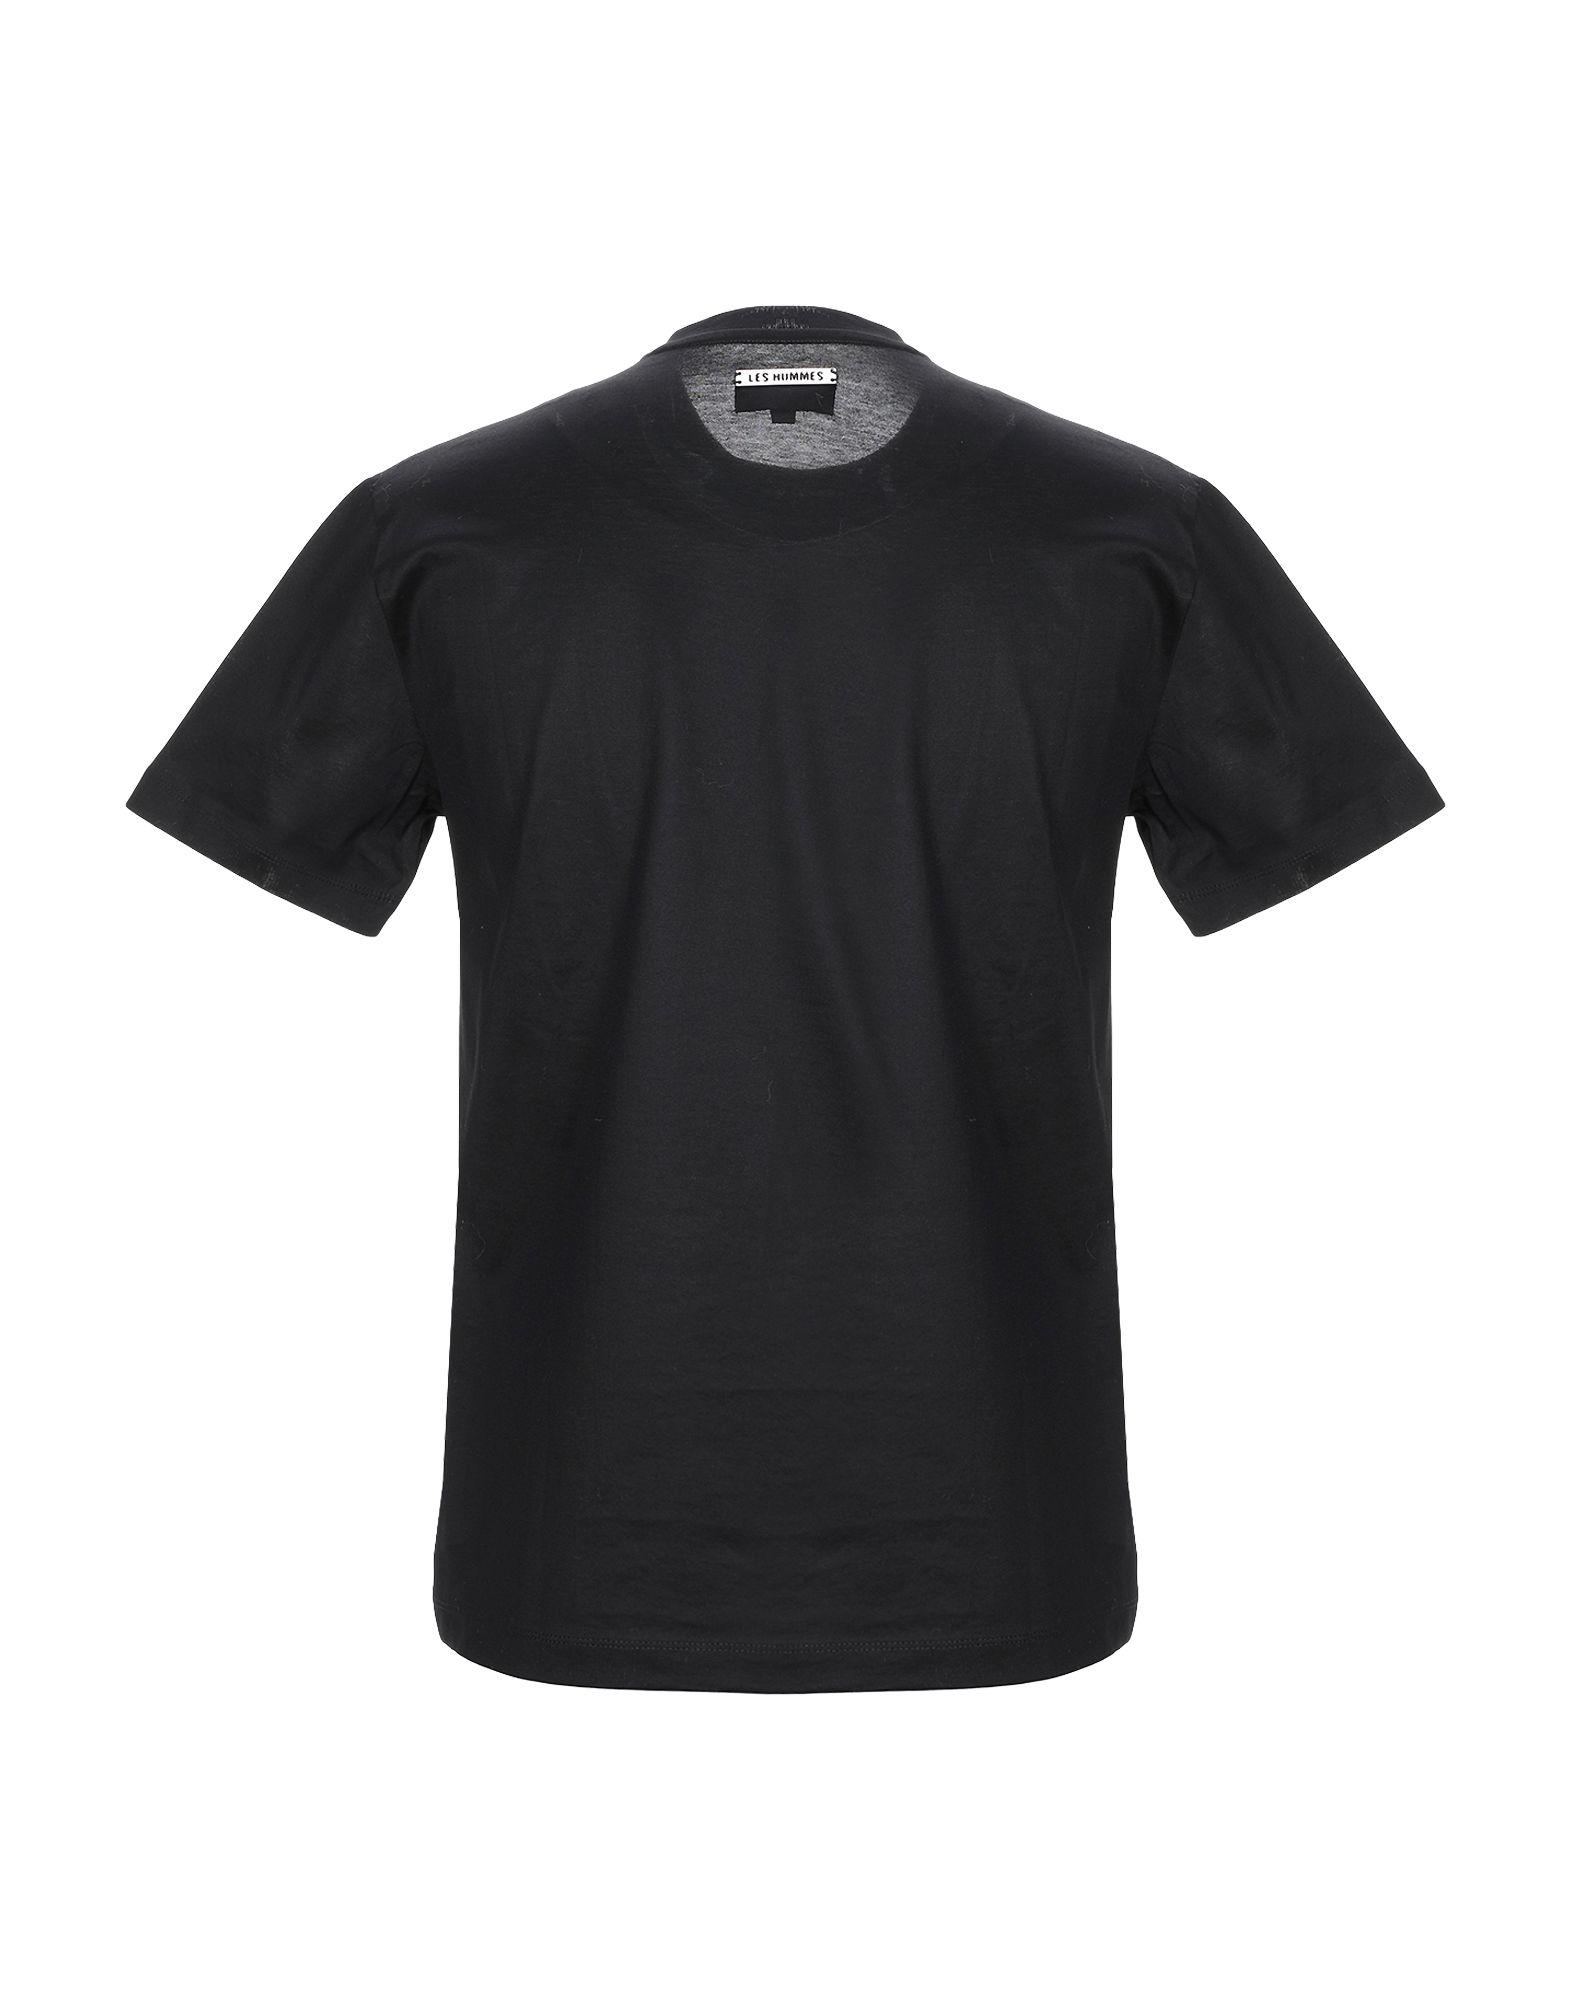 Les Hommes T-shirt in Black for Men - Lyst